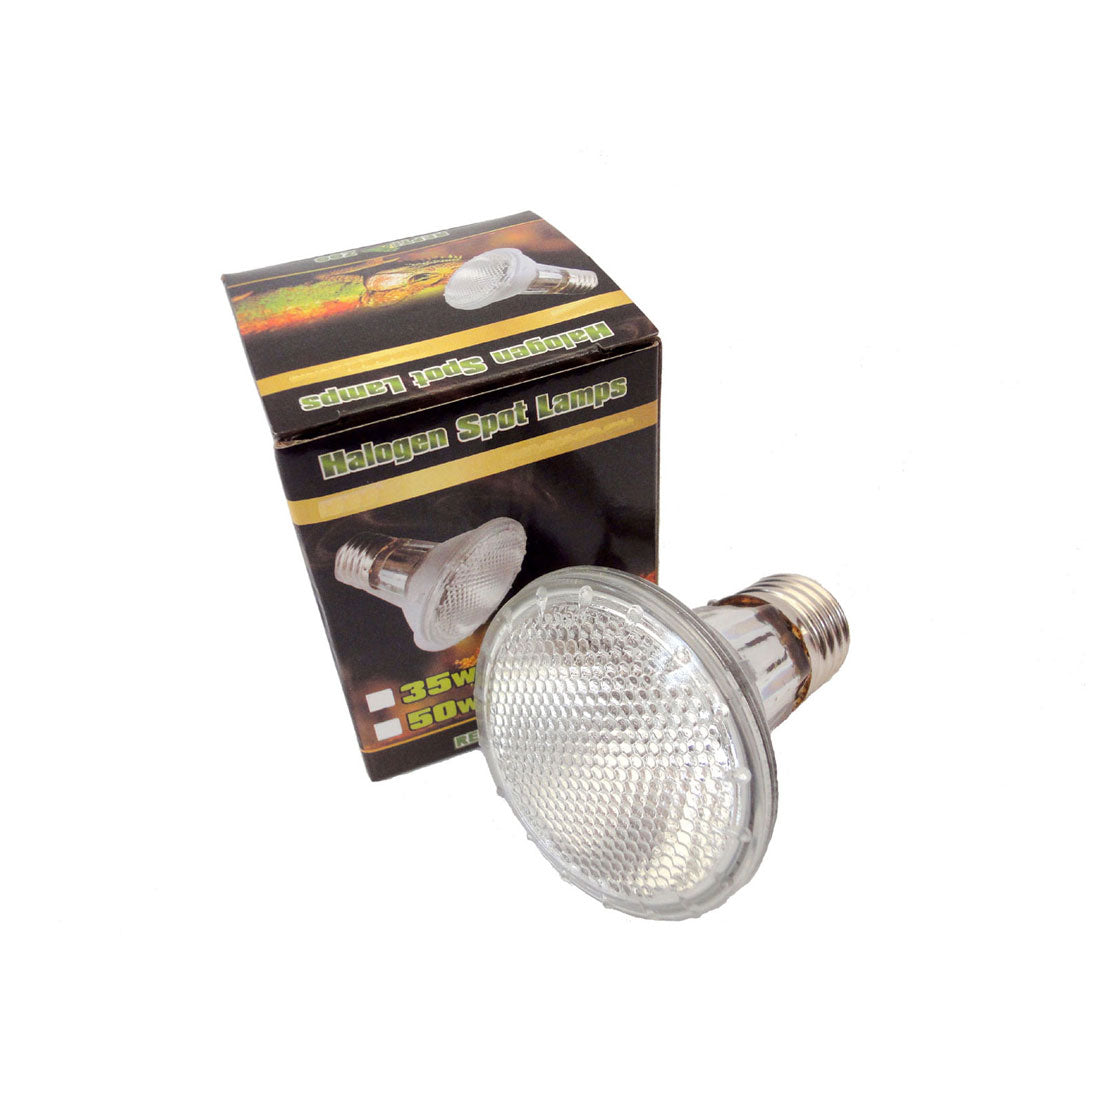 Halogen Spot Lamp 35W E27 Screw Type Pack of 3